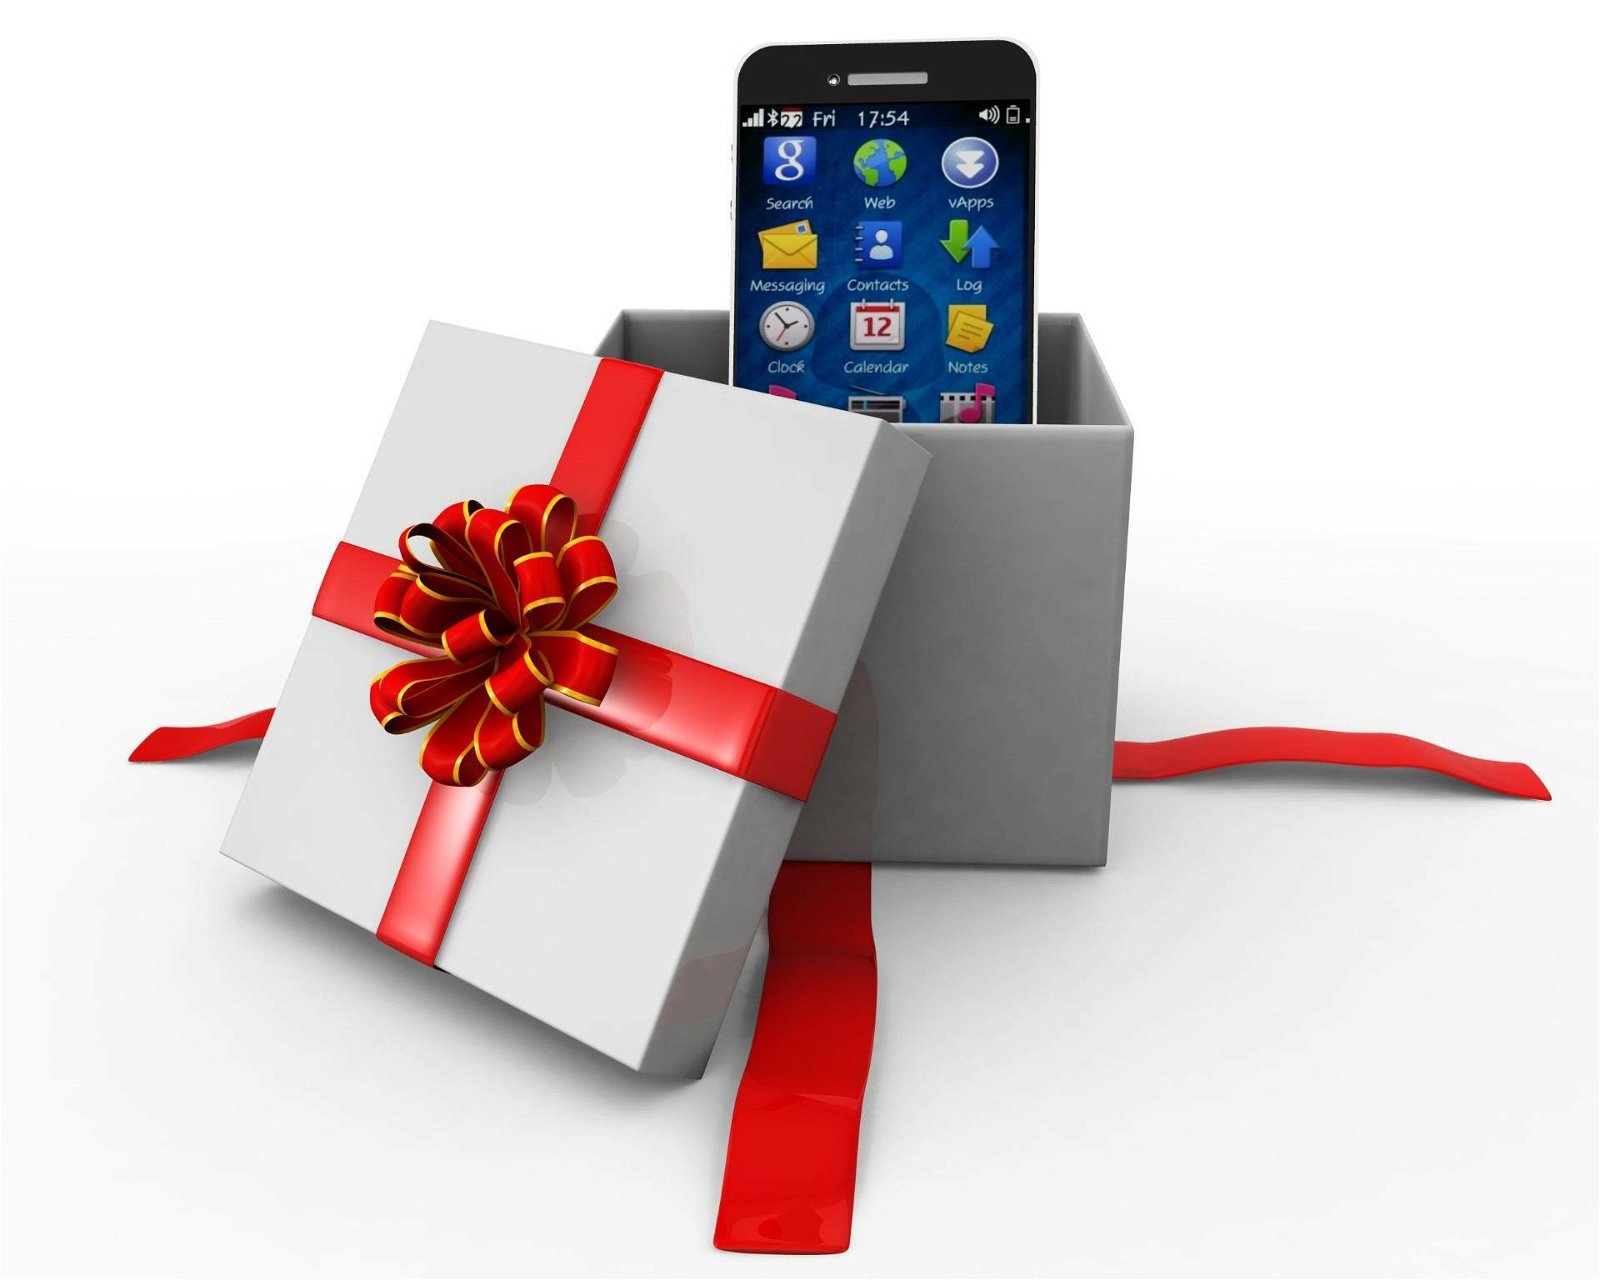 Immagine di Quale sarà lo smartphone più venduto a Natale?